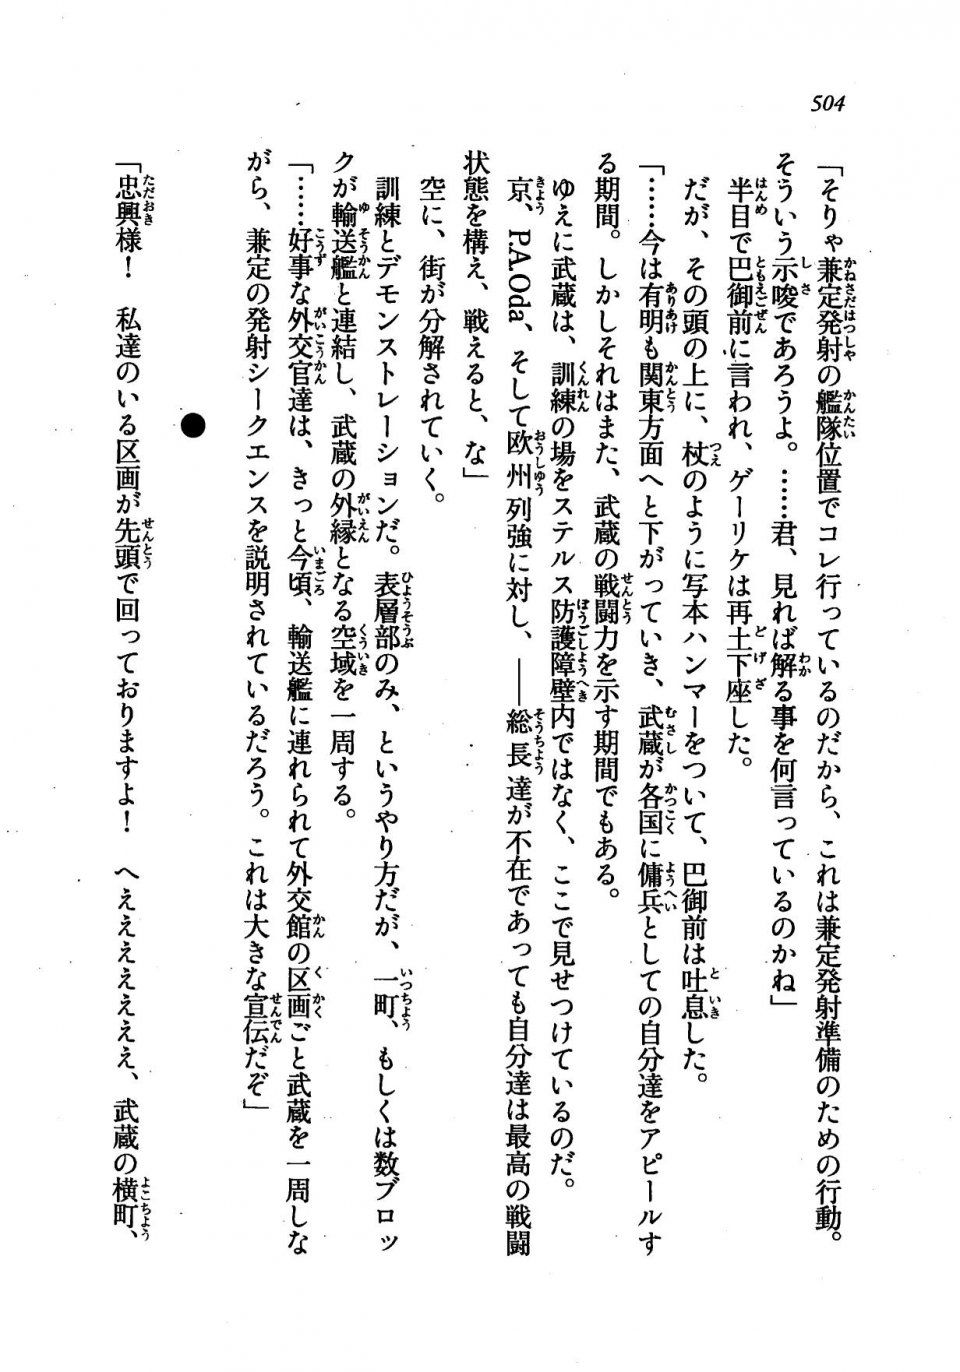 Kyoukai Senjou no Horizon LN Vol 21(8C) Part 1 - Photo #503